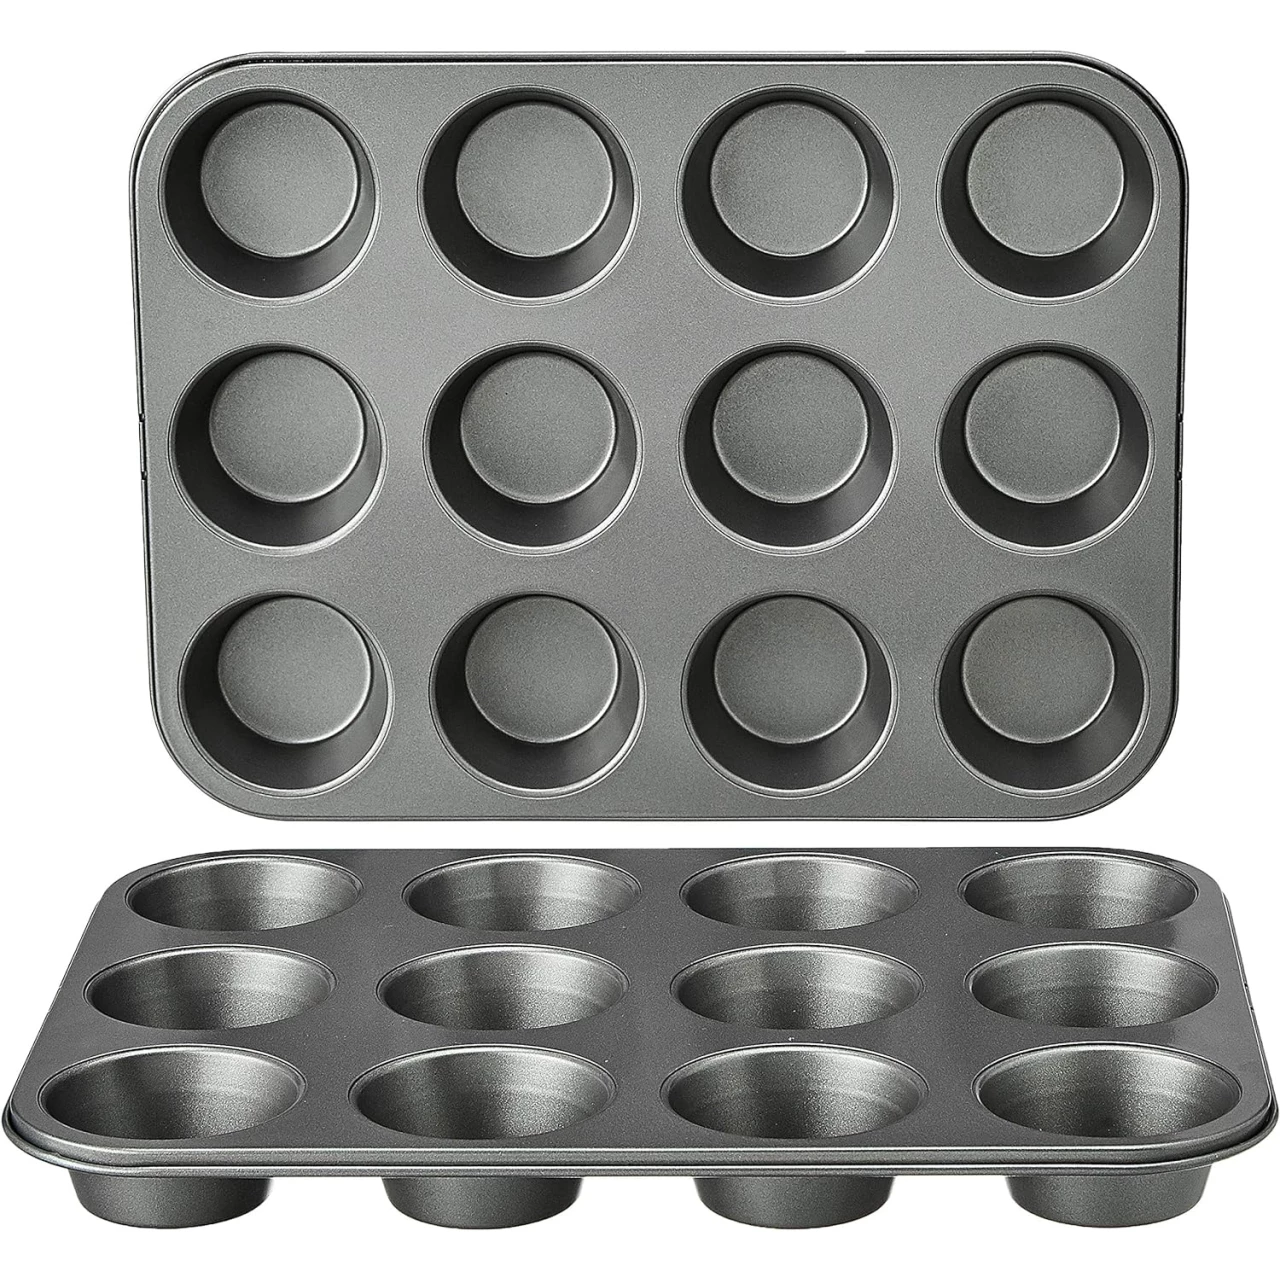 Amazon Basics Nonstick Round Muffin Baking Pan, 12 Cups, Set of 2, Gray